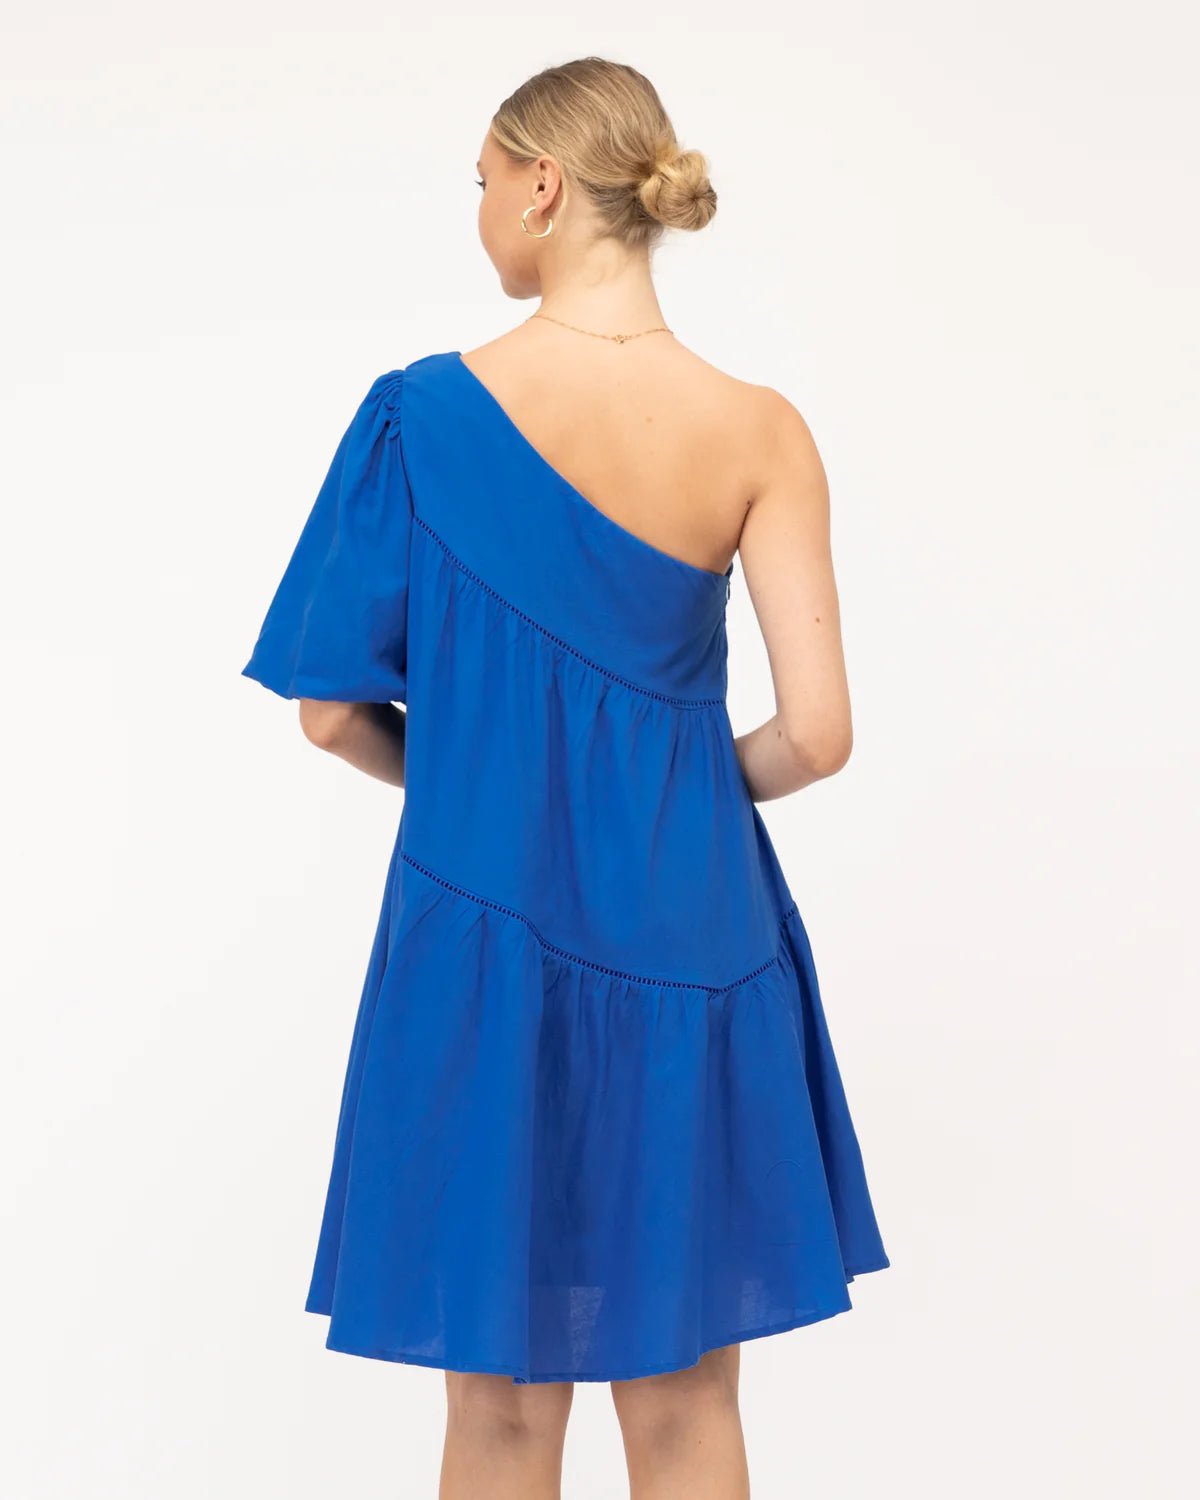 Gracie Blue One Shoulder Mini - NIXII Clothing